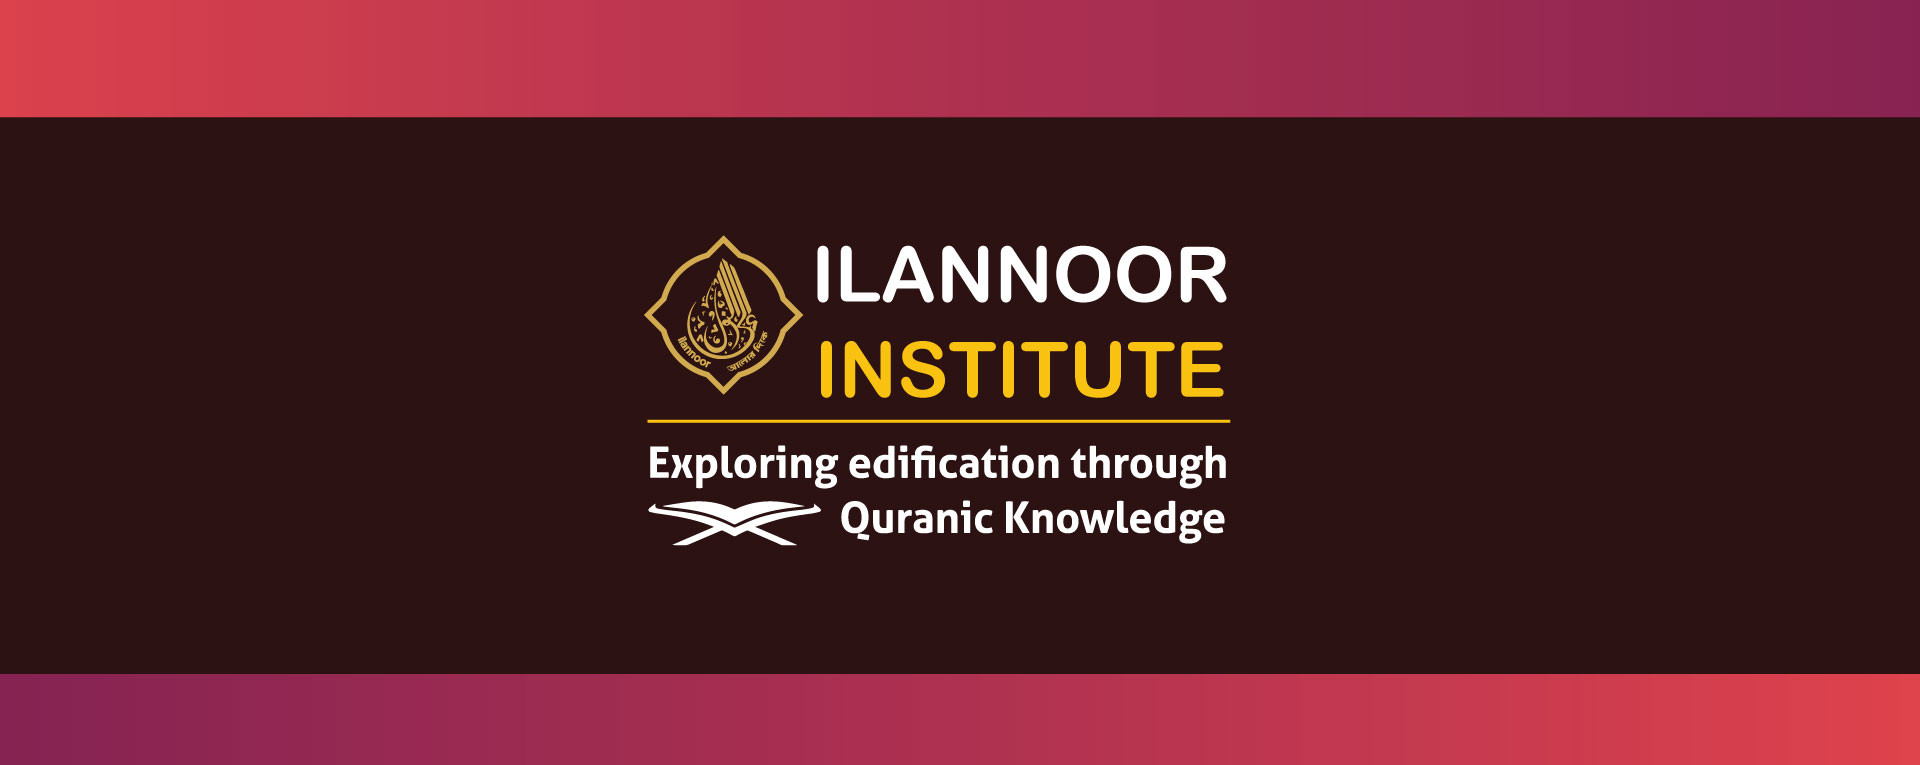 ilannoor Institute Banner